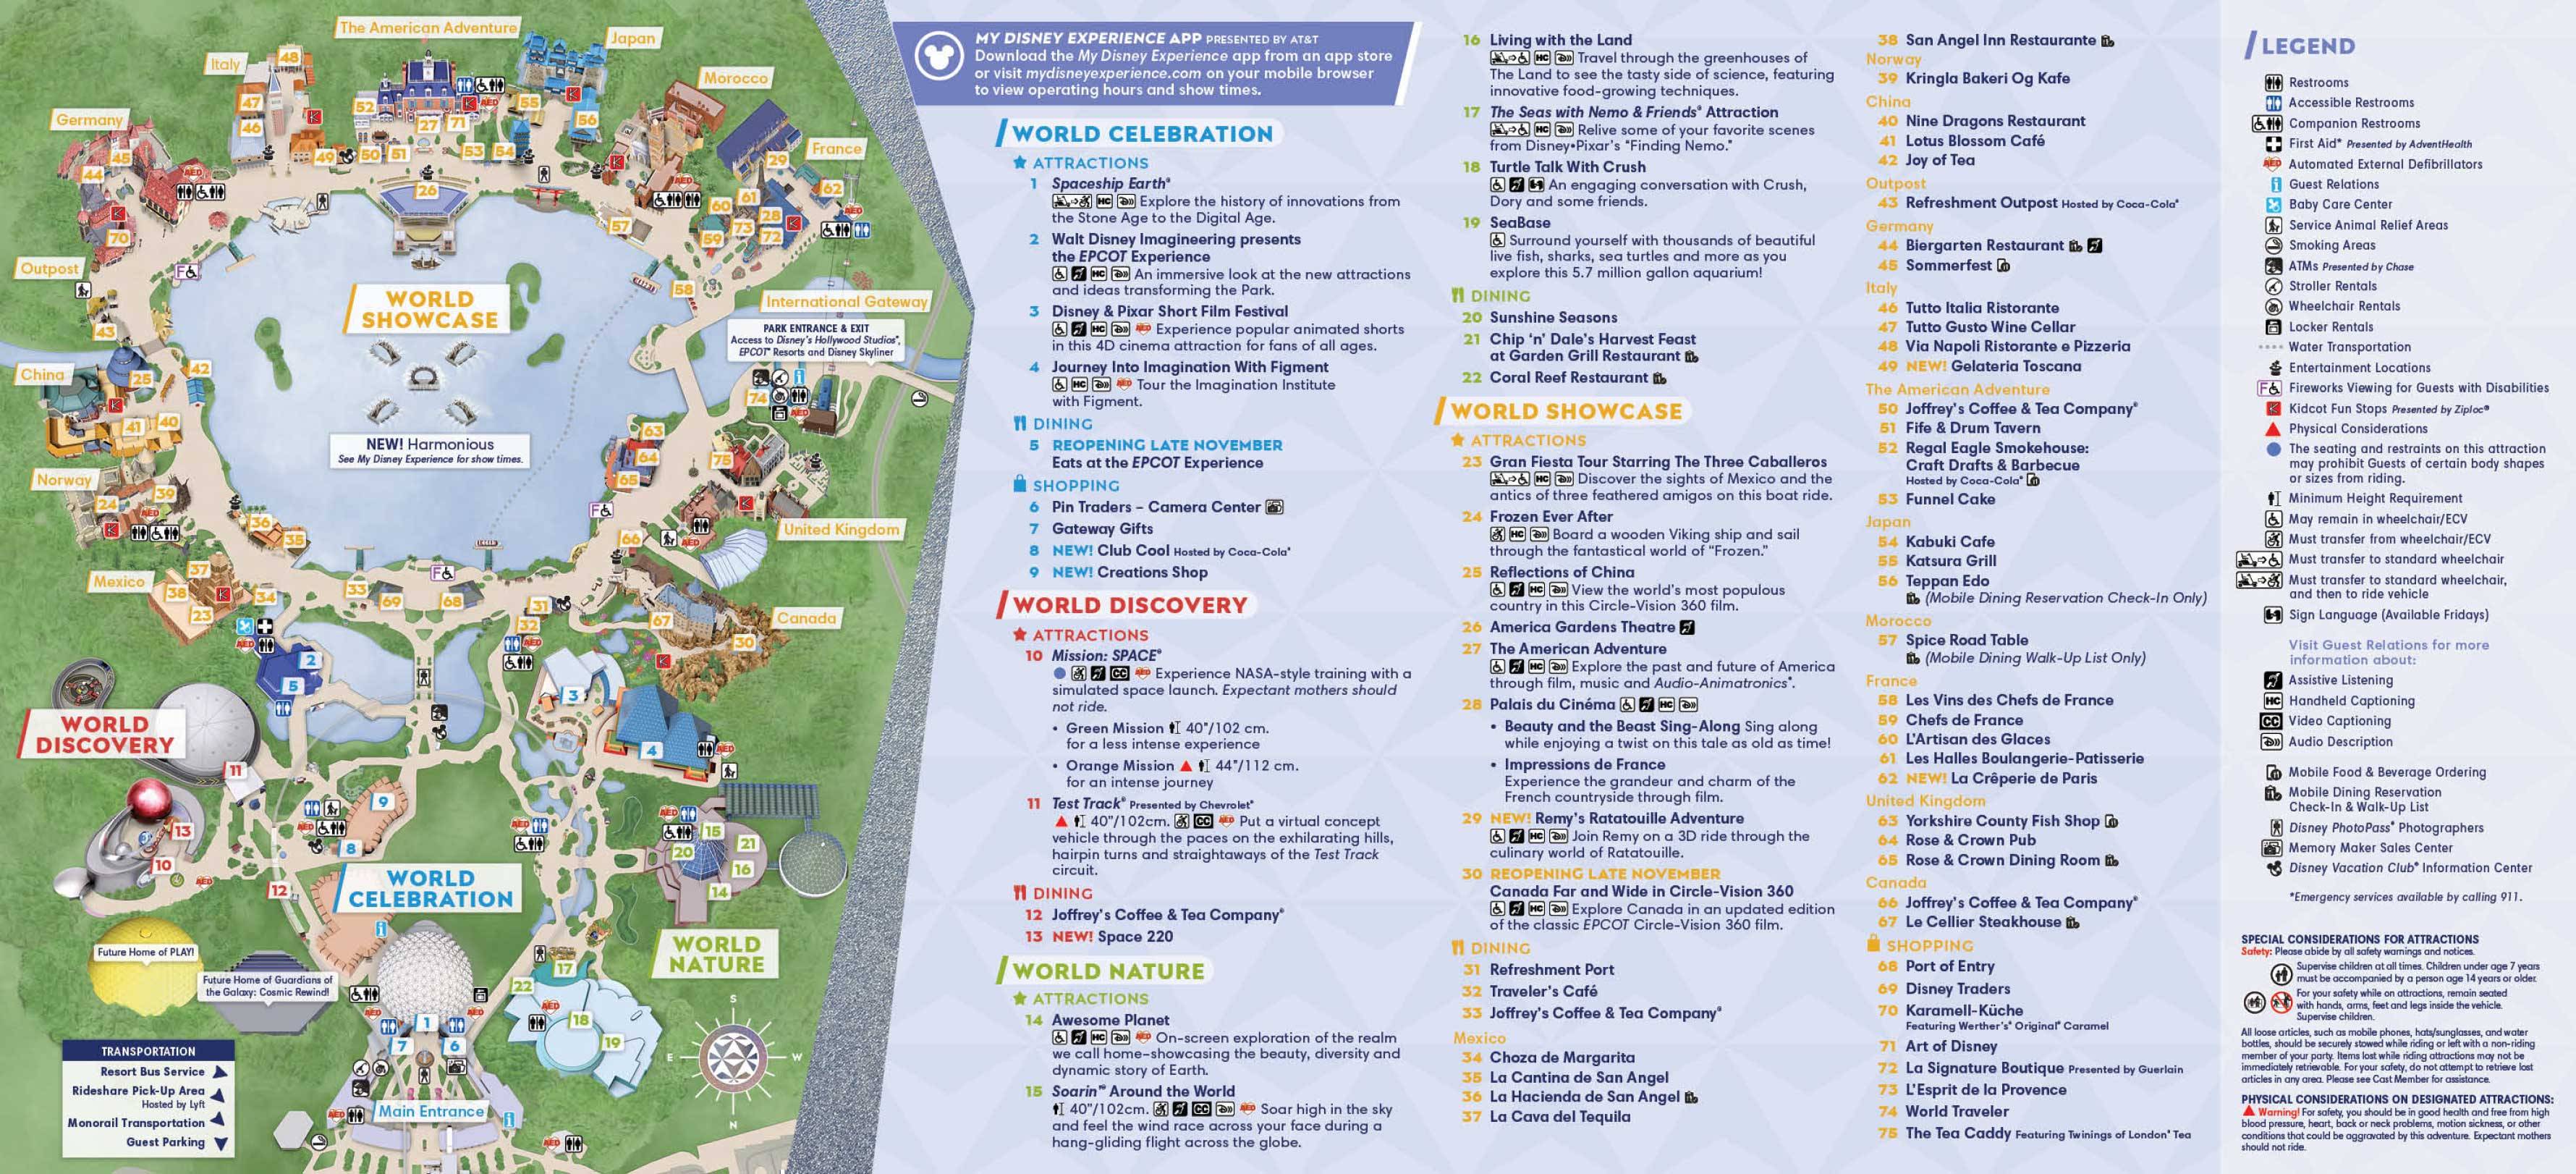 Walt Disney World 50th anniversary theme park maps - October 2021